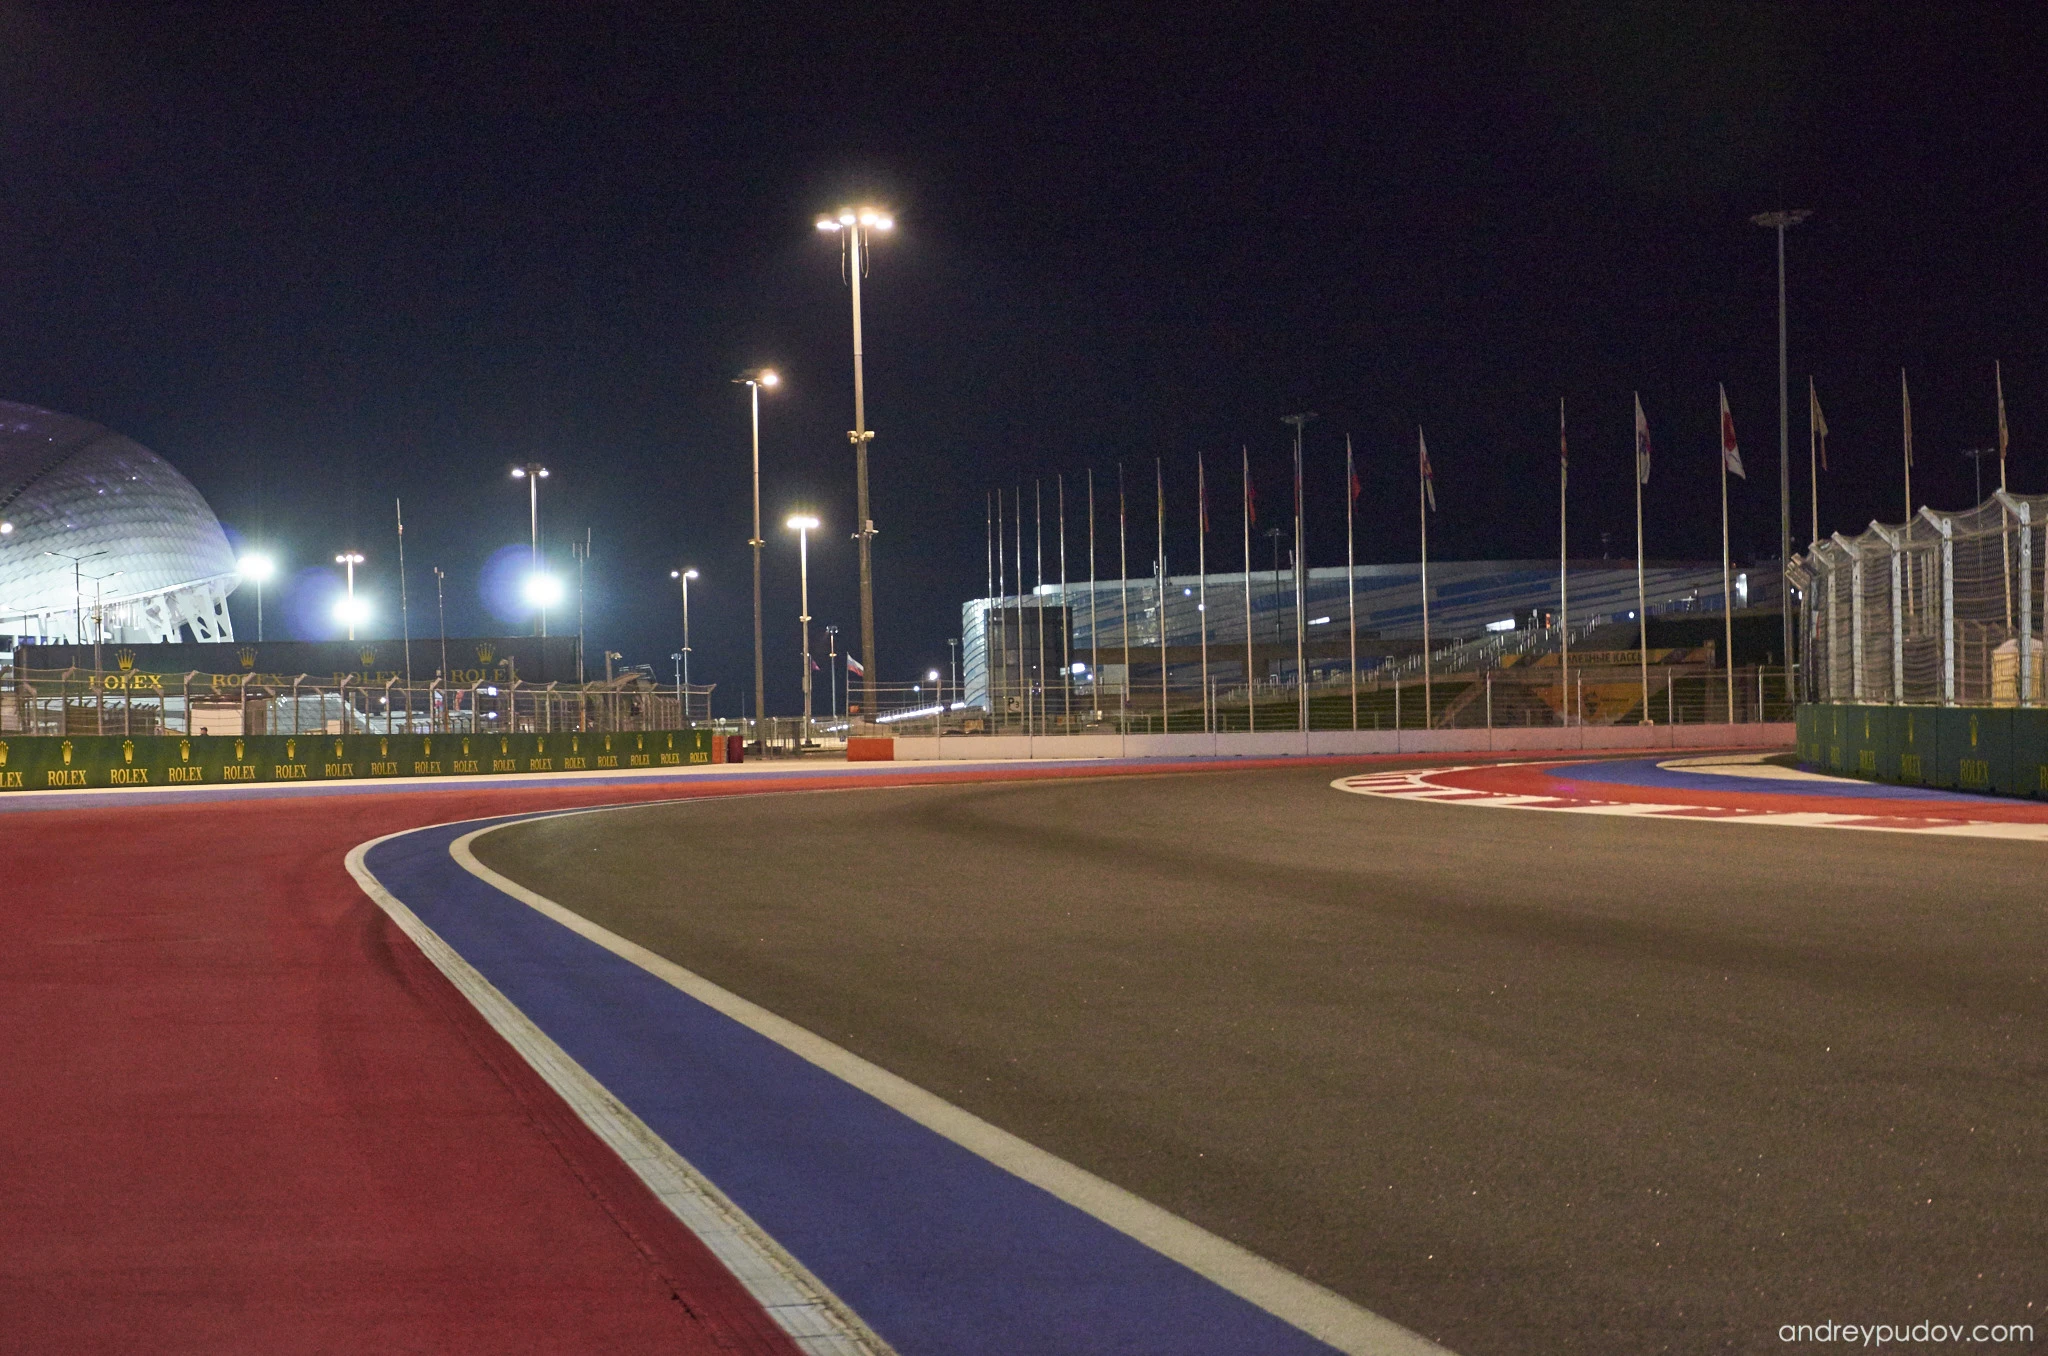 2015 Formula 1 Russian Grand Prix - The night before the race.